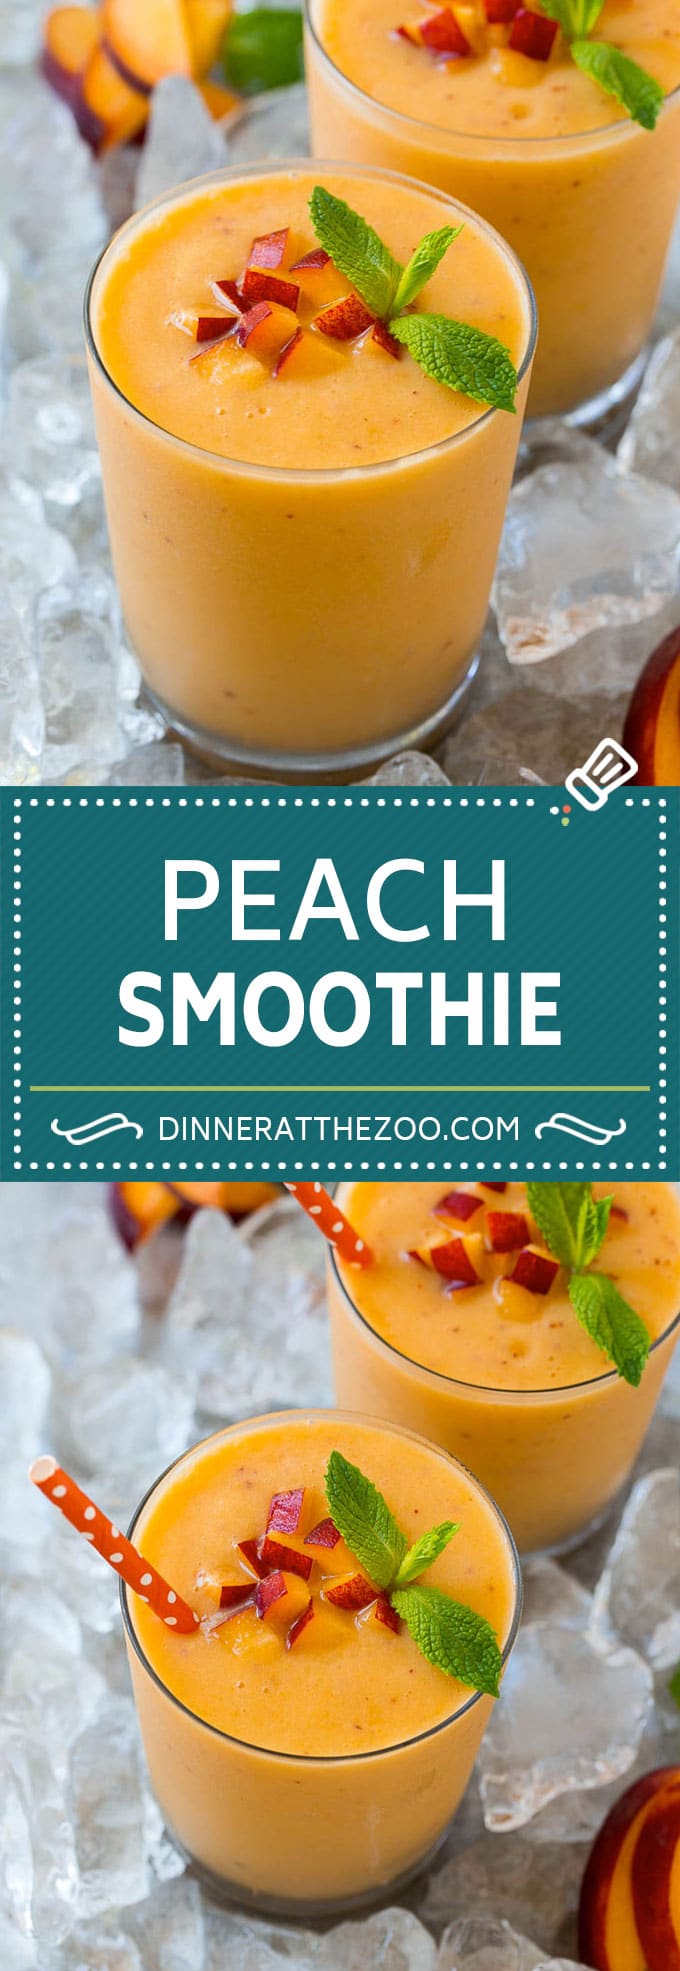 Peach Smoothie Recipe | Easy Smoothie Recipe | Peach Recipe #peach #smoothie #drink #dinneratthezoo